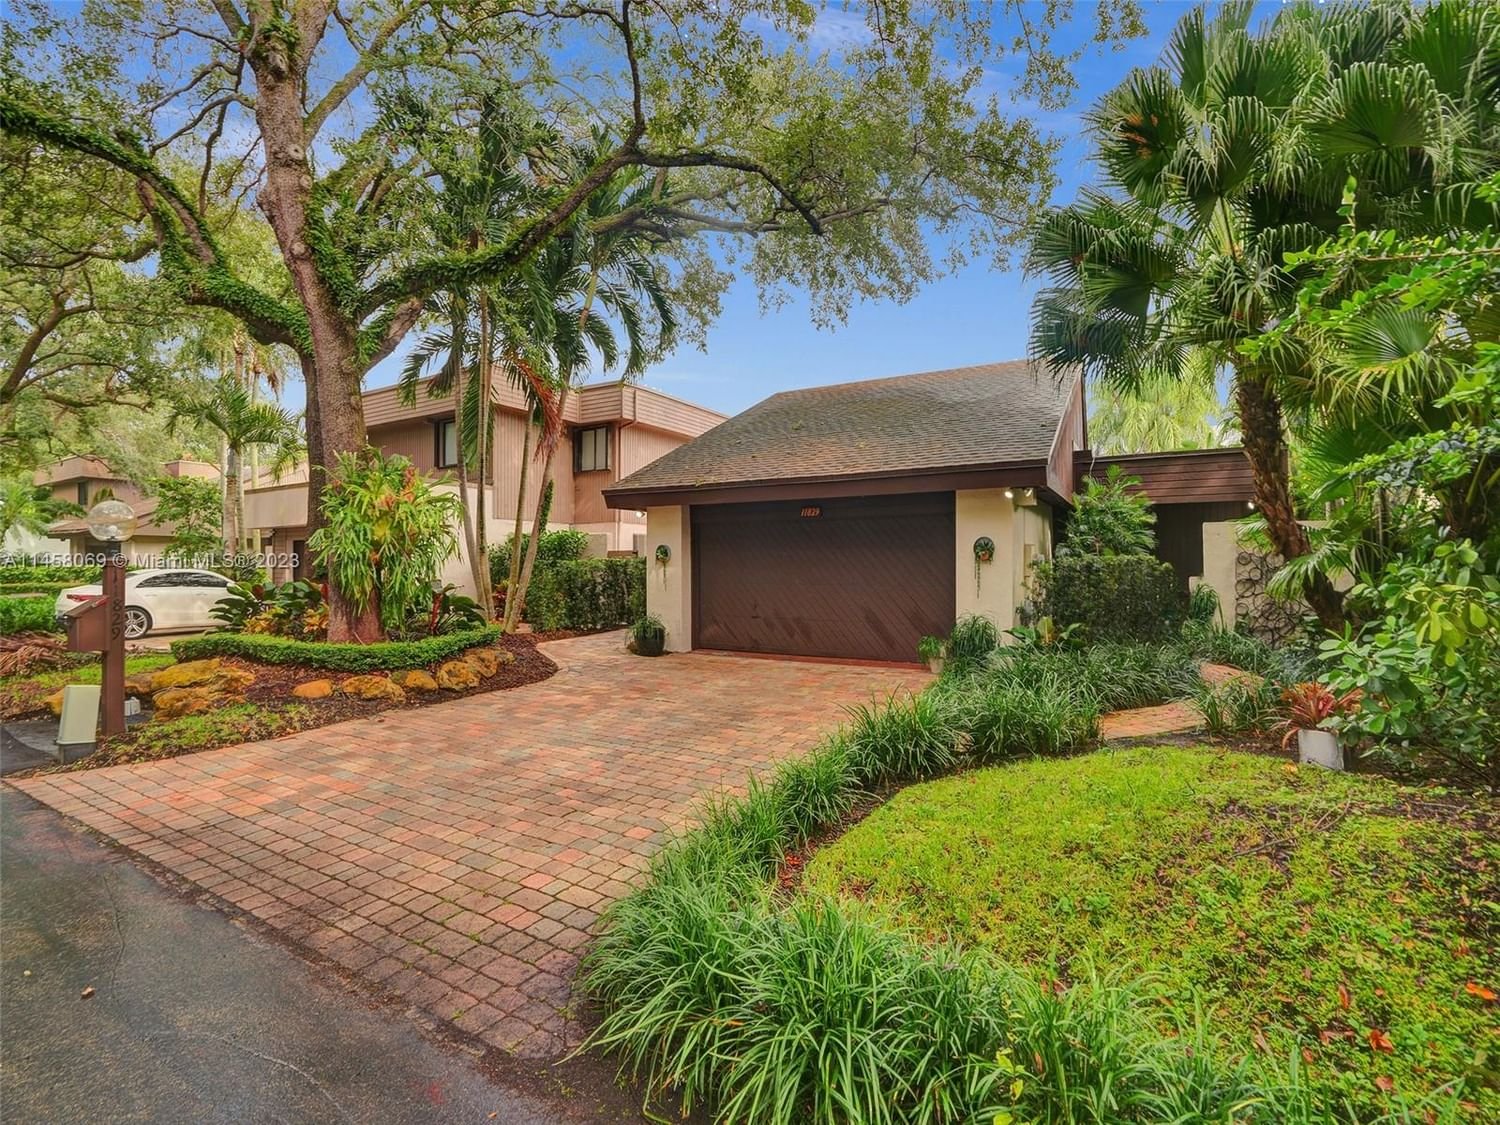 Real estate property located at 11829 77th Ter, Miami-Dade County, Miami, FL